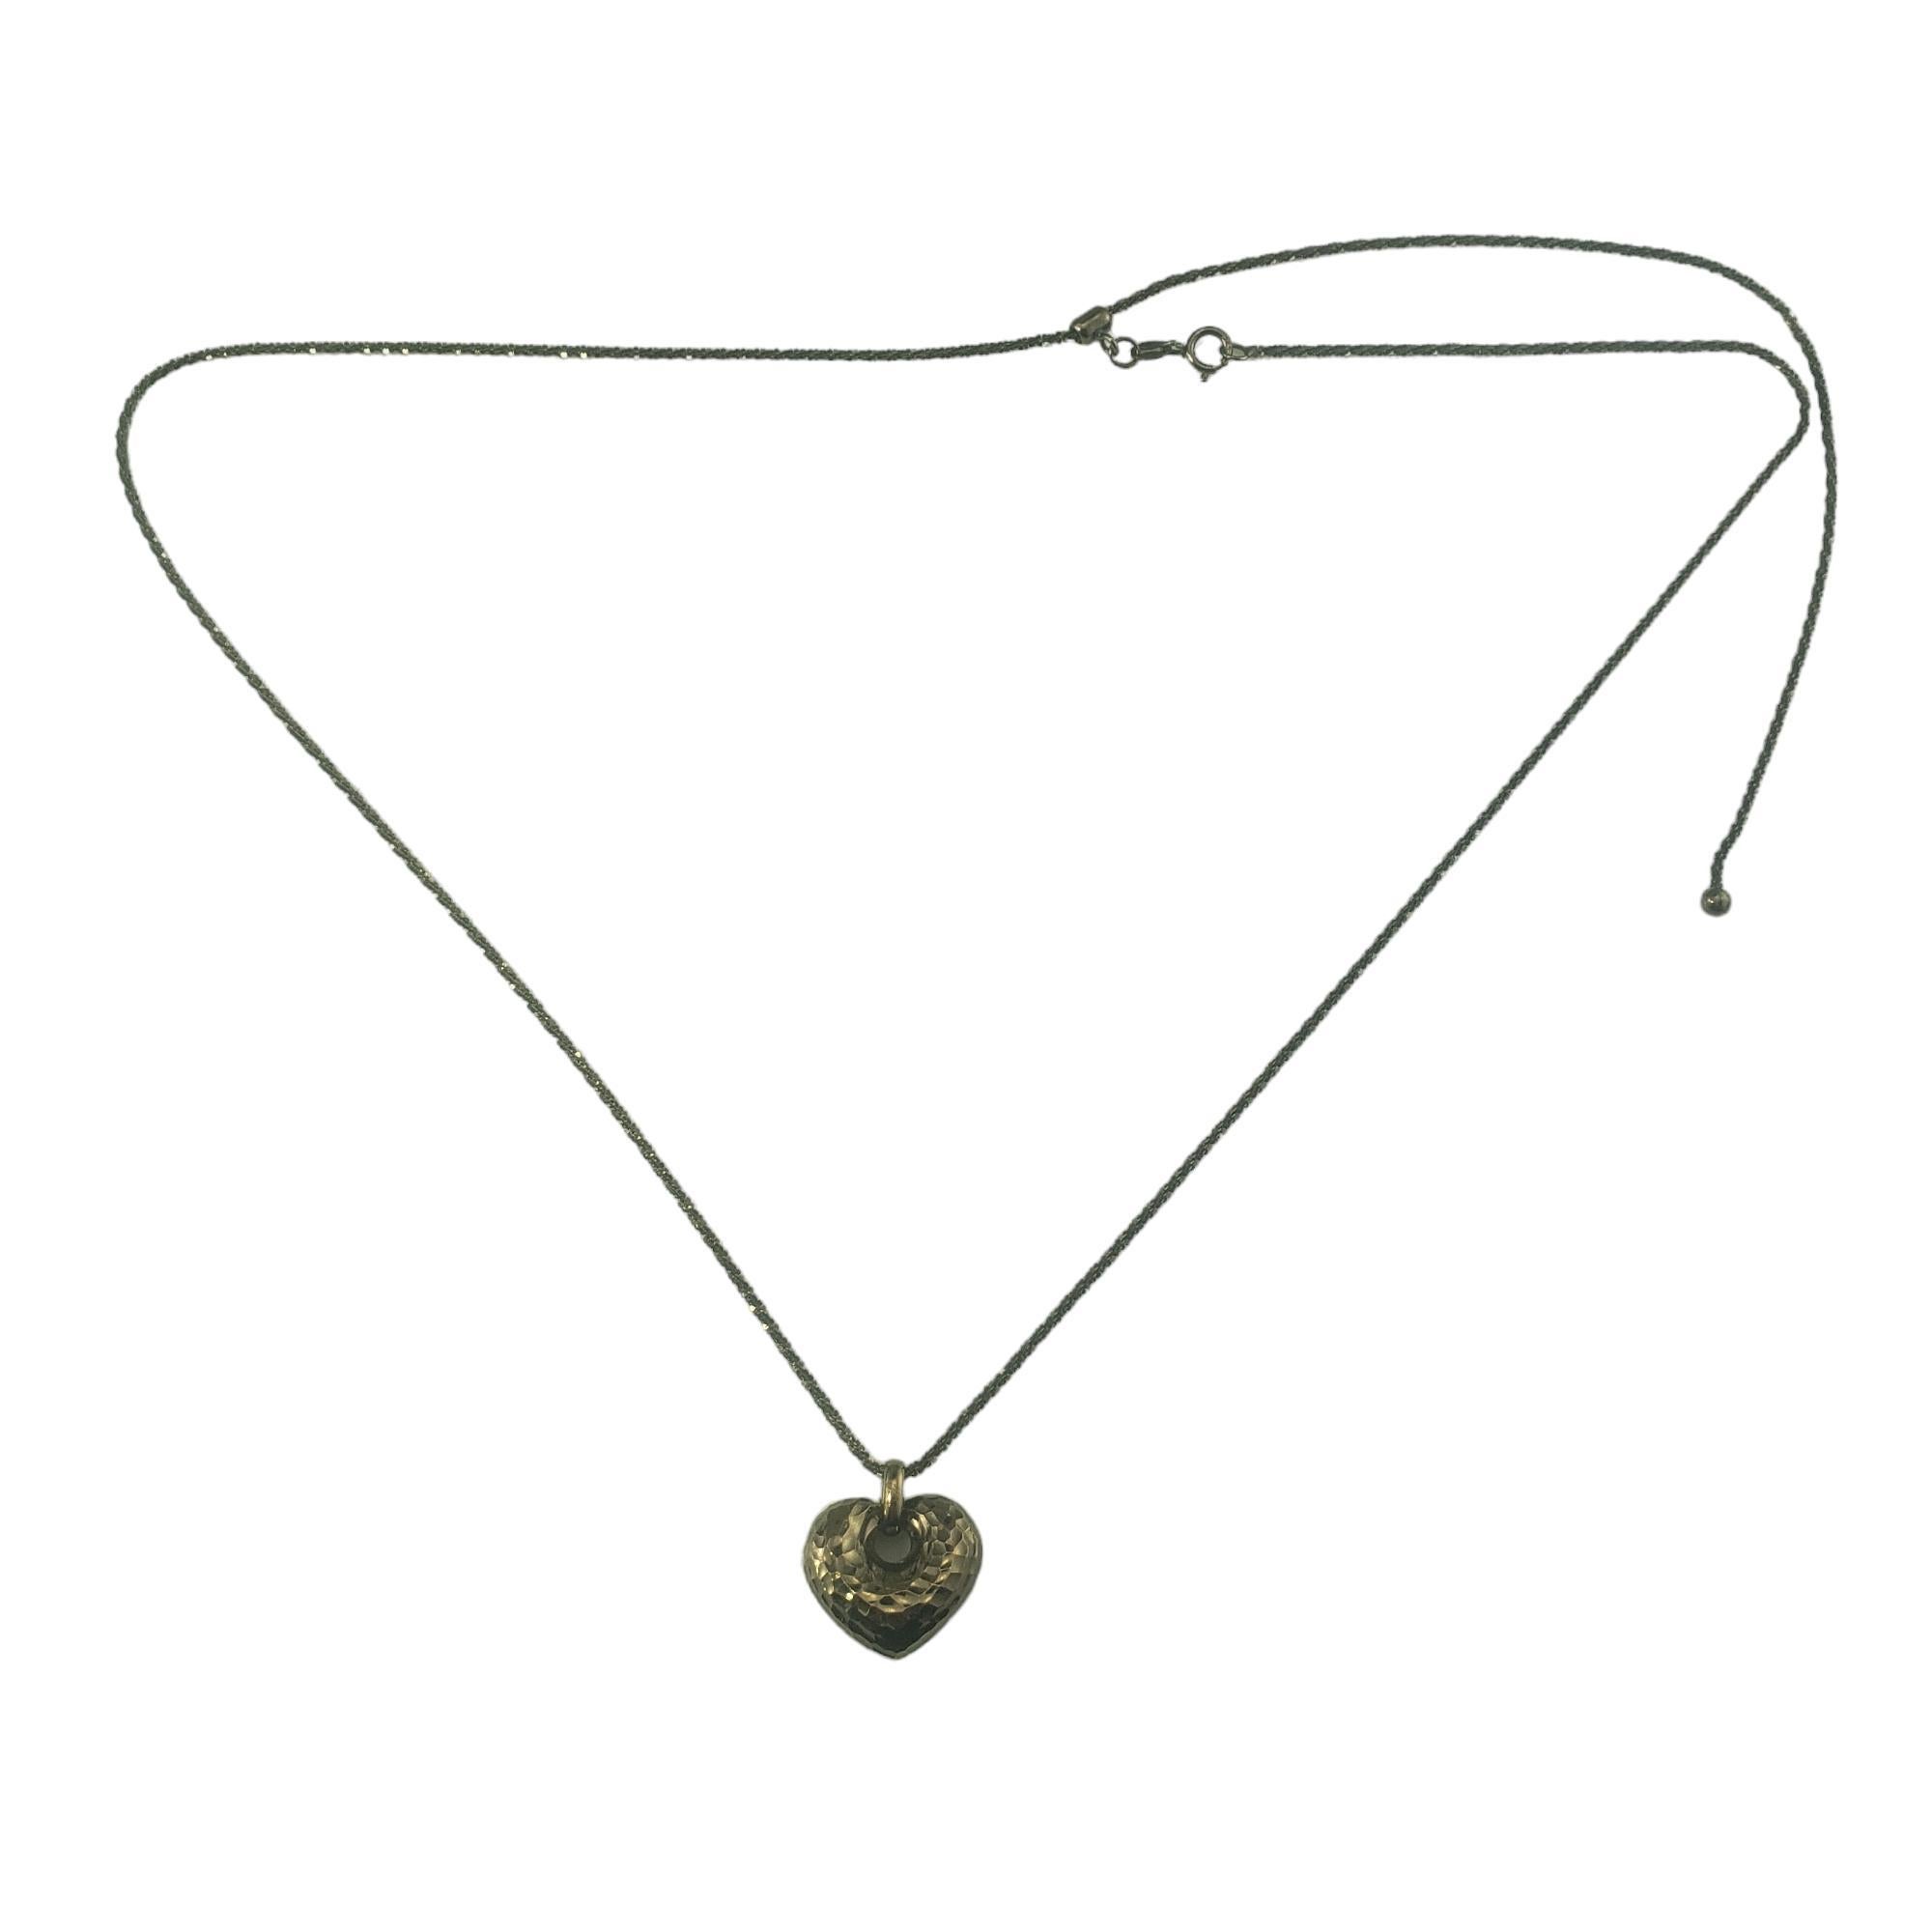 Vintage 14 Karat Black Gold Heart Pendant Necklace-

This elegant heart pendant necklace is crafted in beautifully detailed 14K black gold.

Size: 24 inches, adjustable (necklace)
         15 mm x 16 mm (pendant)

Hallmark: 14KT  Italy